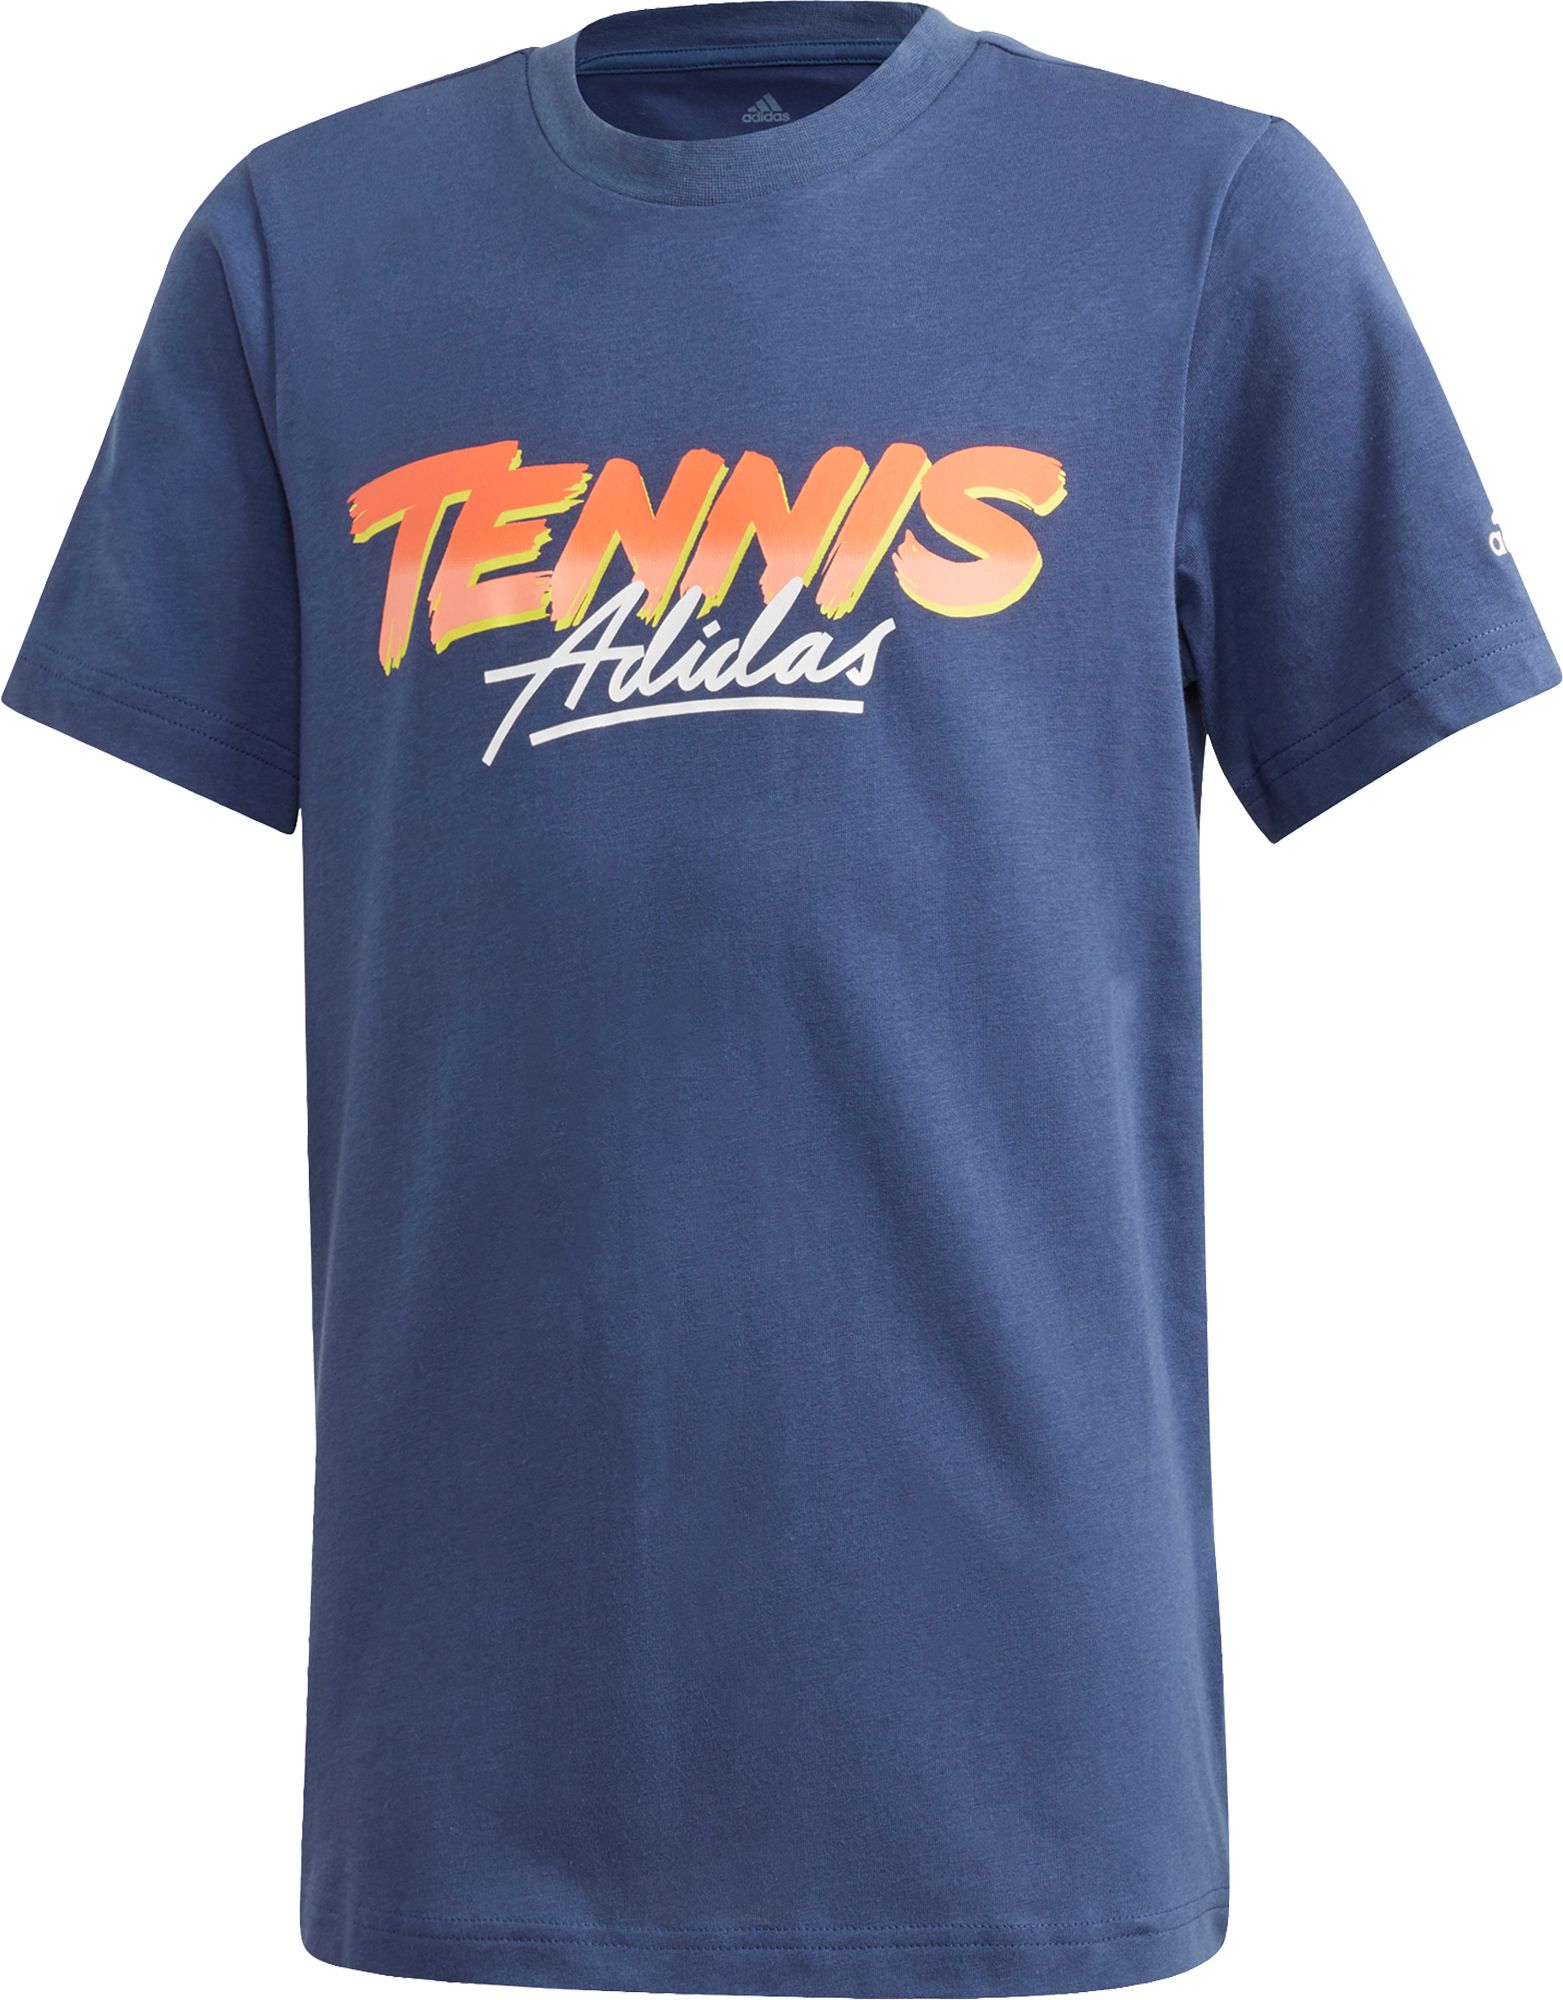 tennis adidas shirt